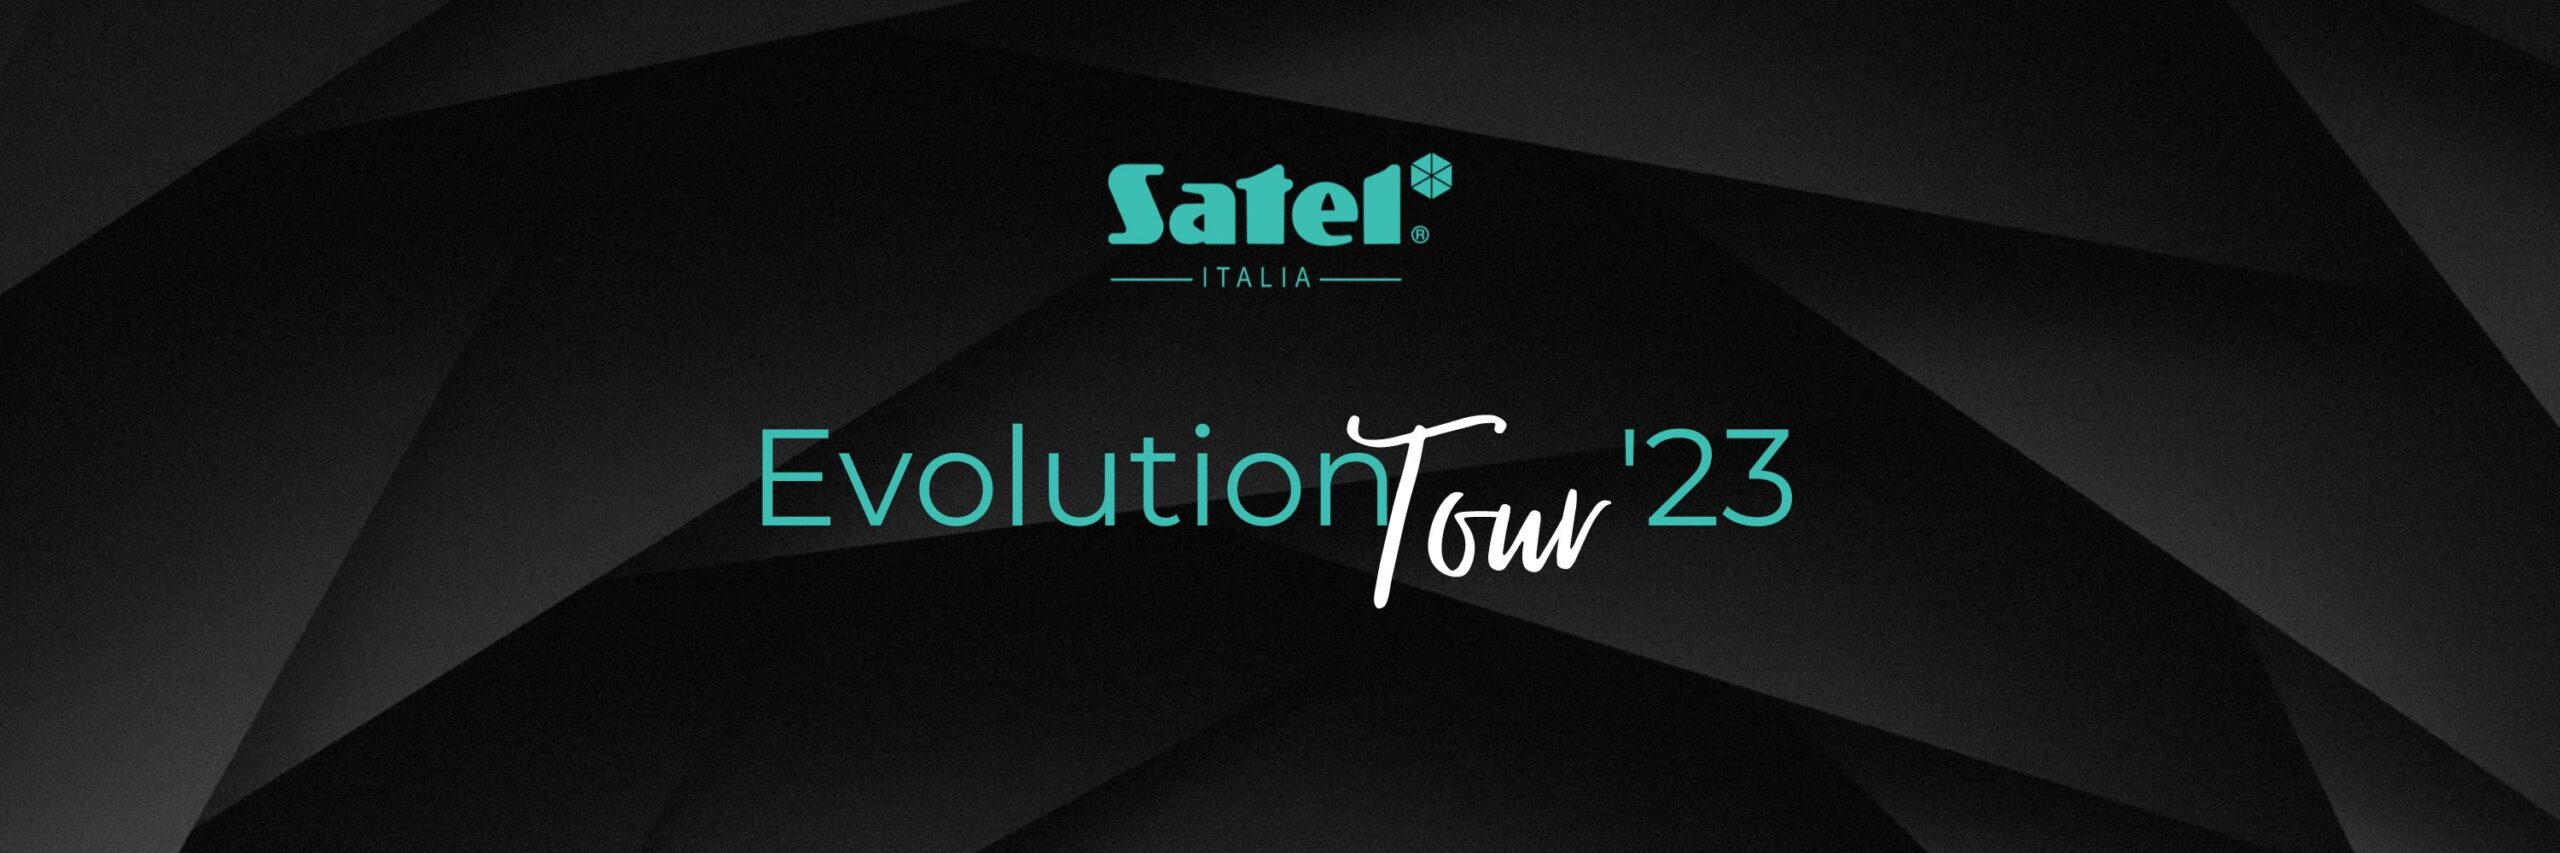 E’ iniziato SATEL Evolution Tour ’23